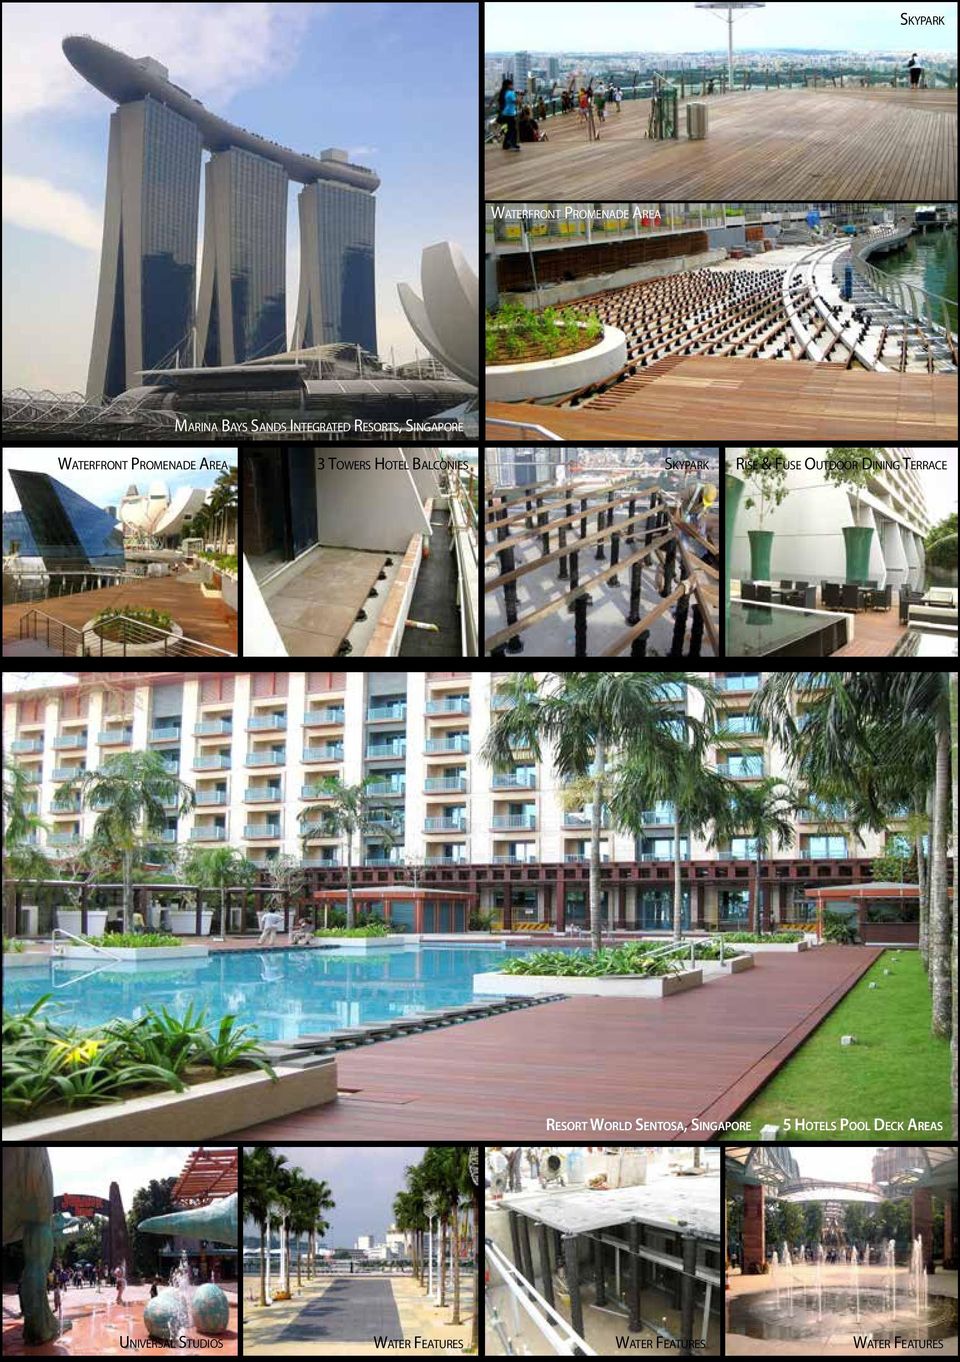 & Fuse Outdoor Dining Terrace Resort World Sentosa, Singapore - 5 Hotels